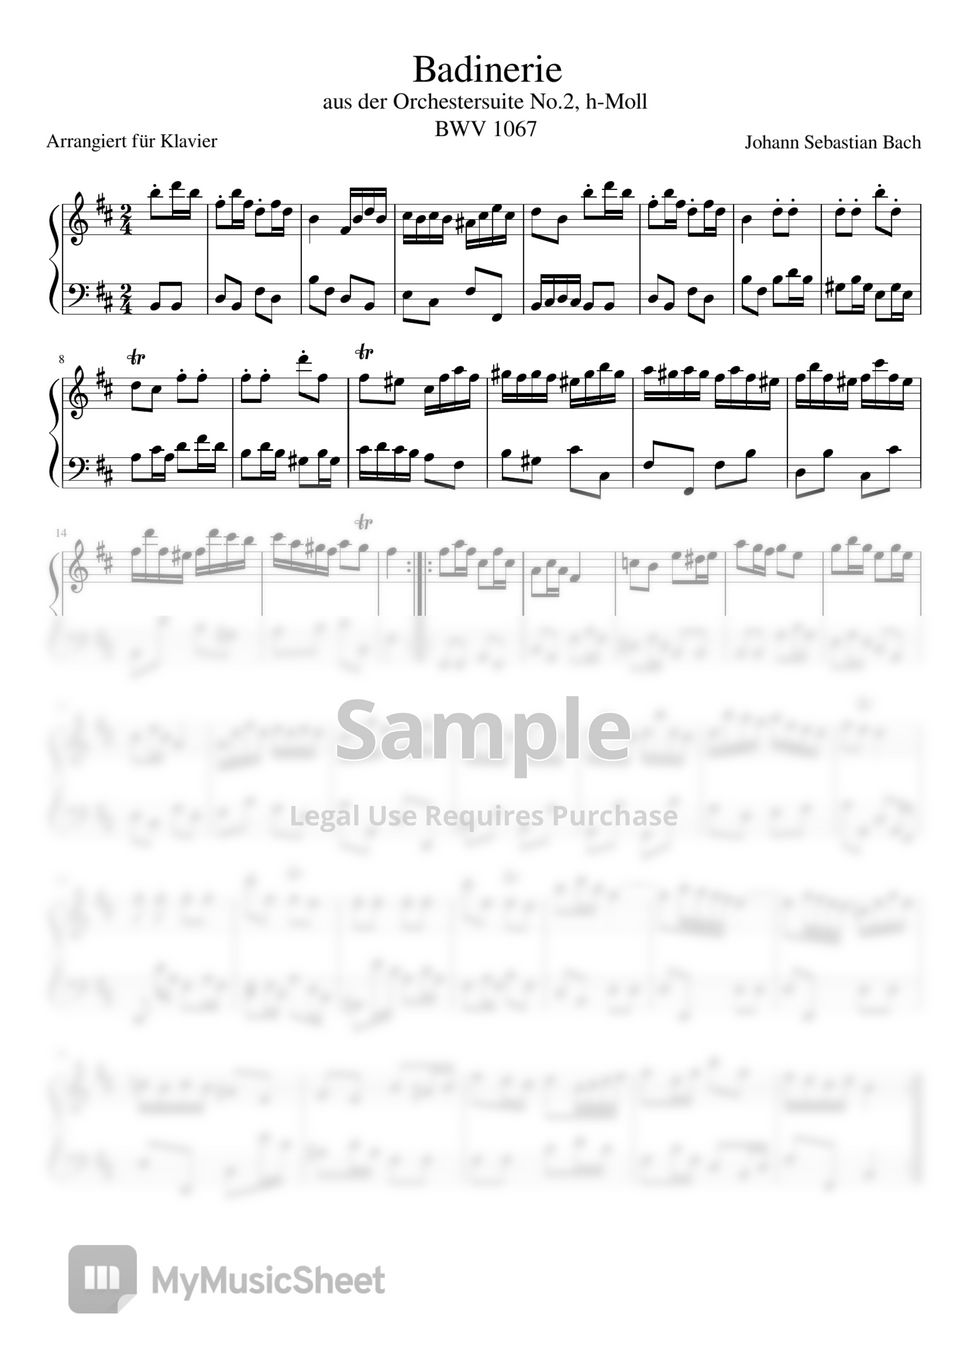 J.S.Bach - Badinerie by J.S.Bach